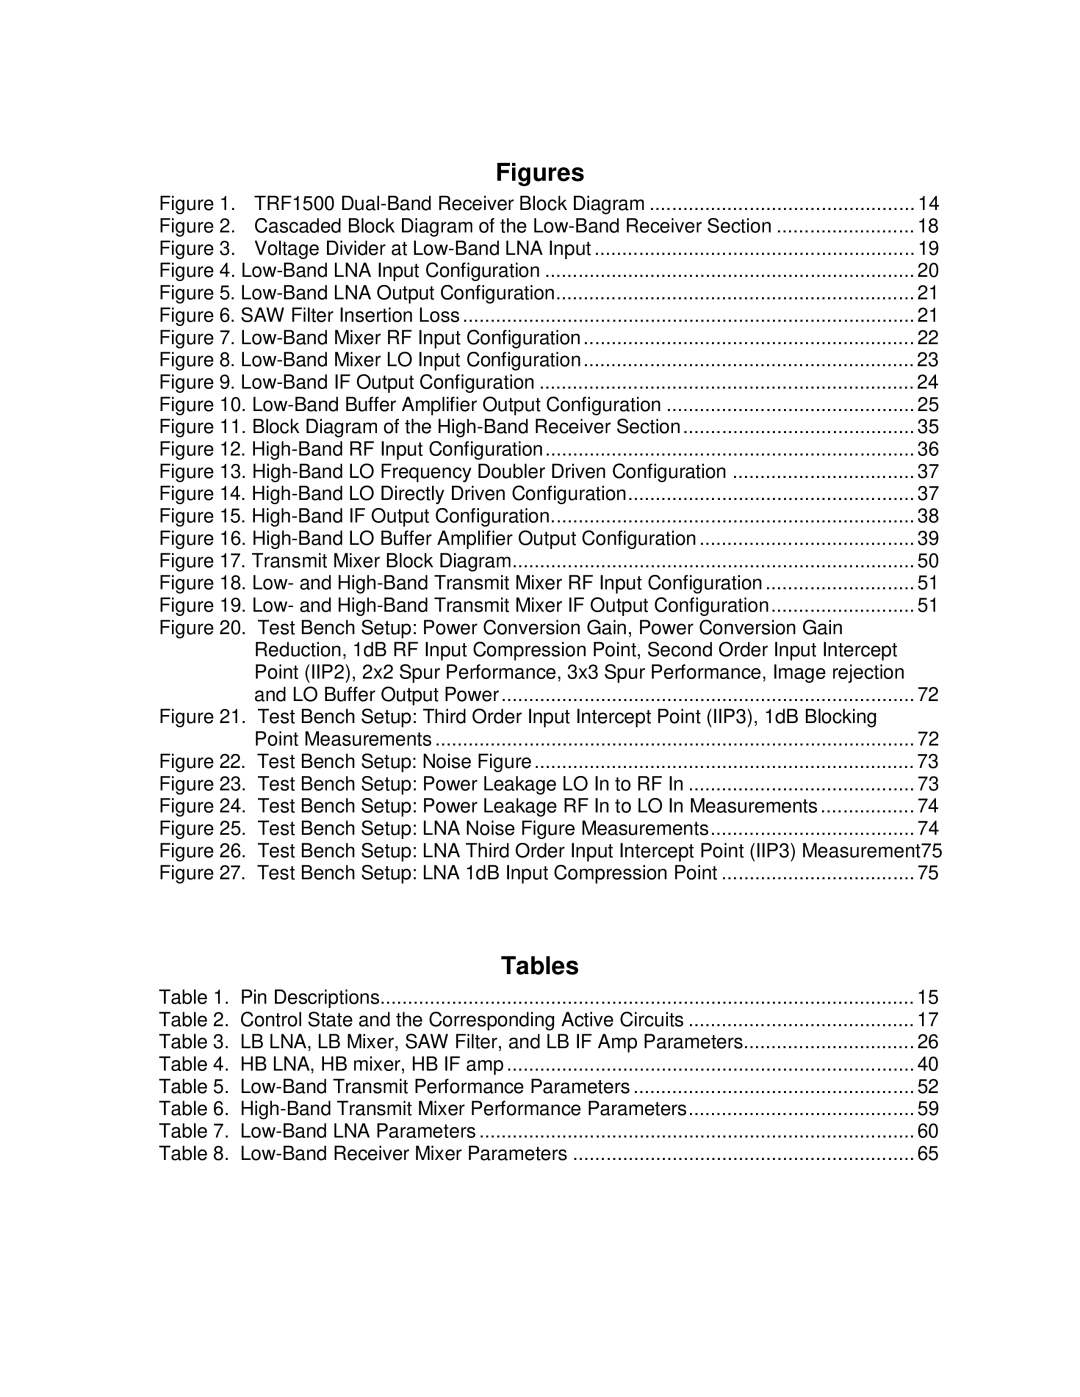 Texas Instruments TRF1500 manual Figures, Tables 